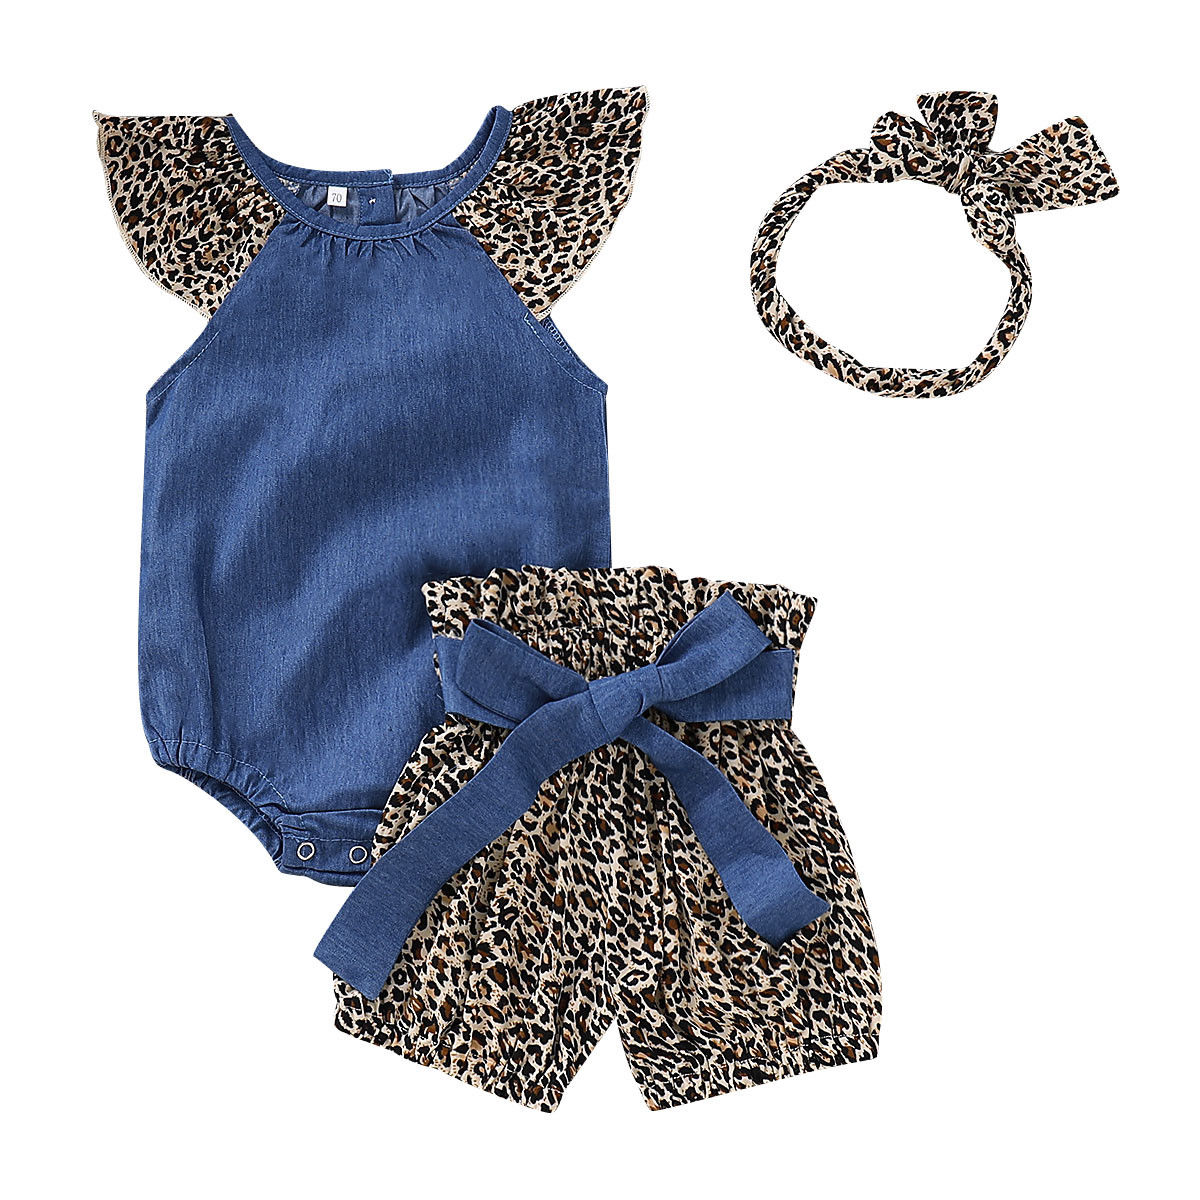 2019 Brand New Newborn Toddler Kids Baby Girls Leopard Denim Clothes Set Cotton Romper Tops+Pants Shorts+Headband Outfits Sets